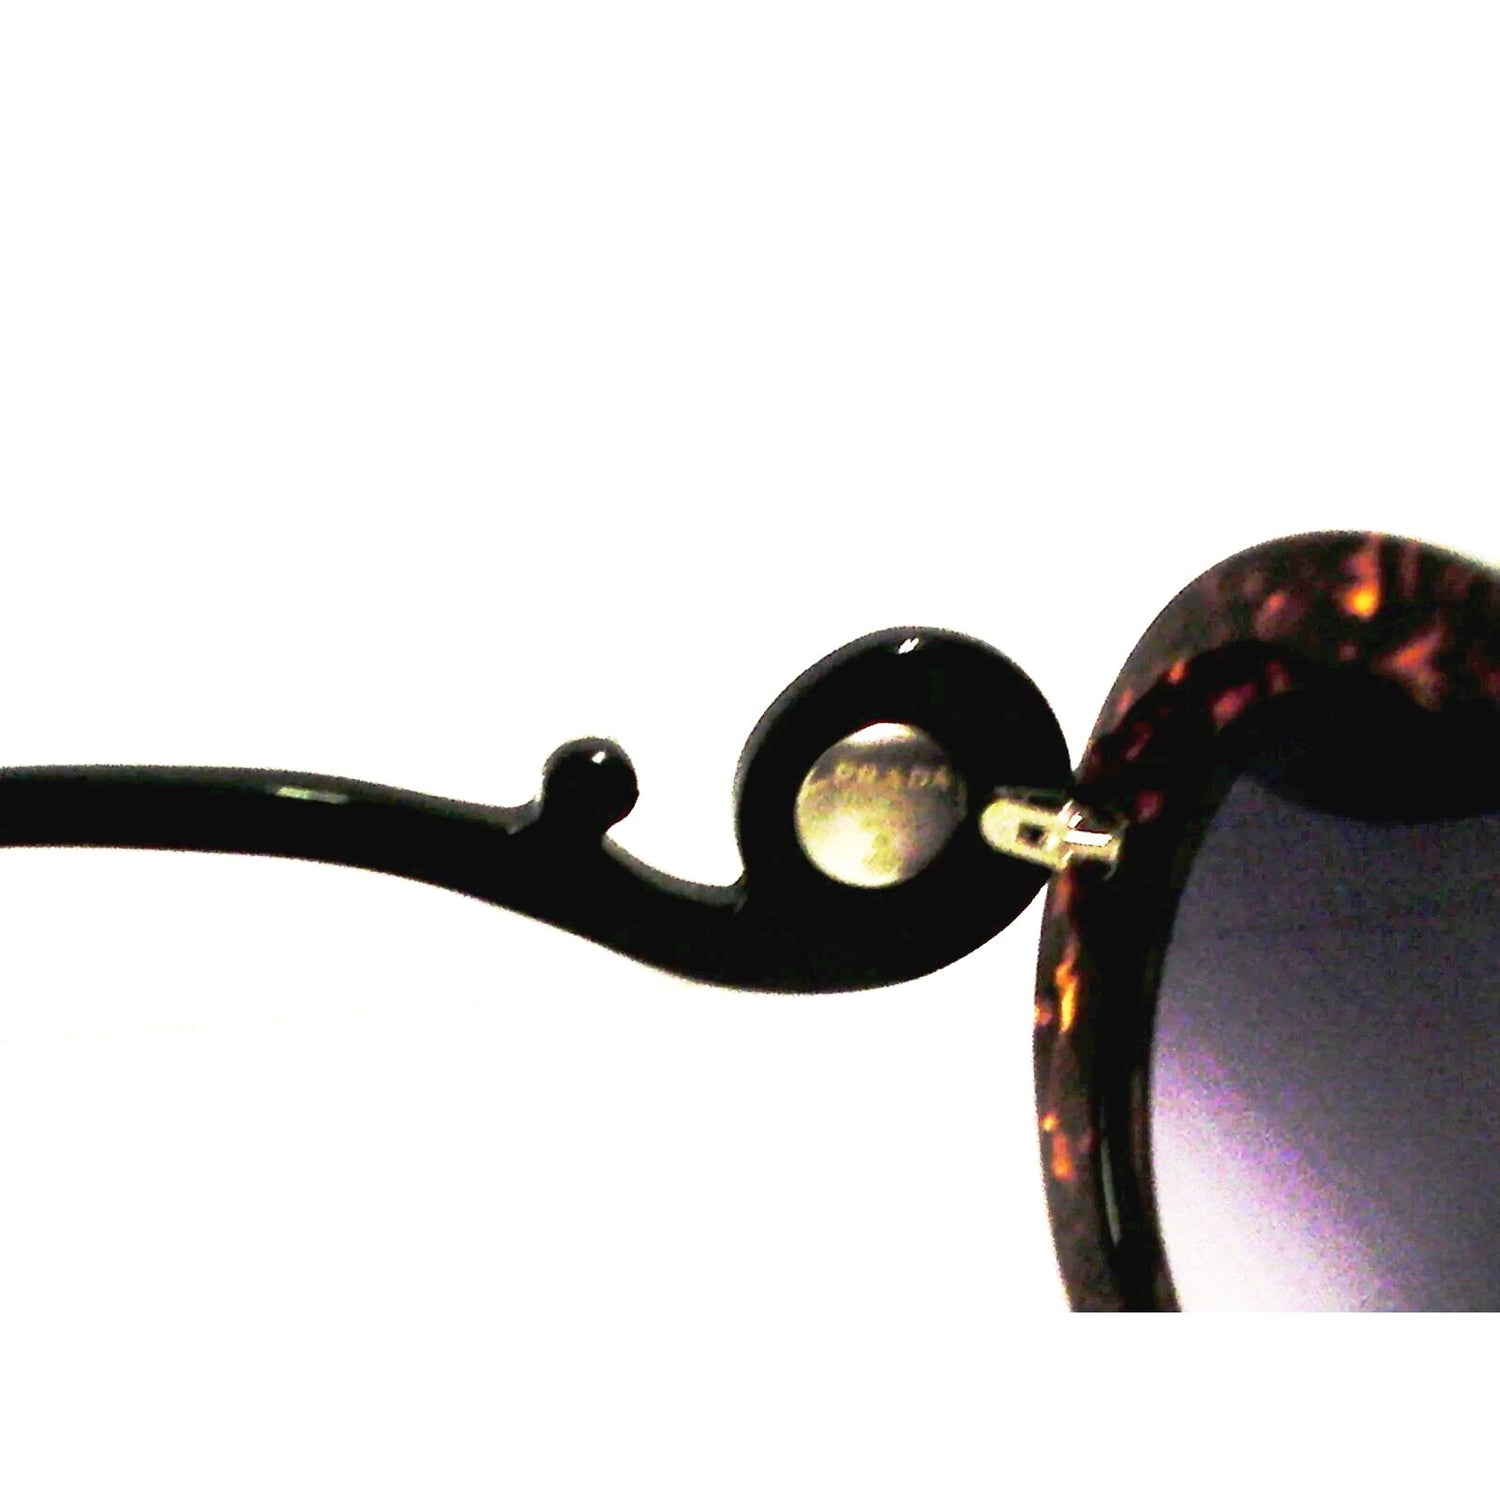 PRADA New Sunglasses womens round tortoise black arm spr 27QS Swarovski Crystal